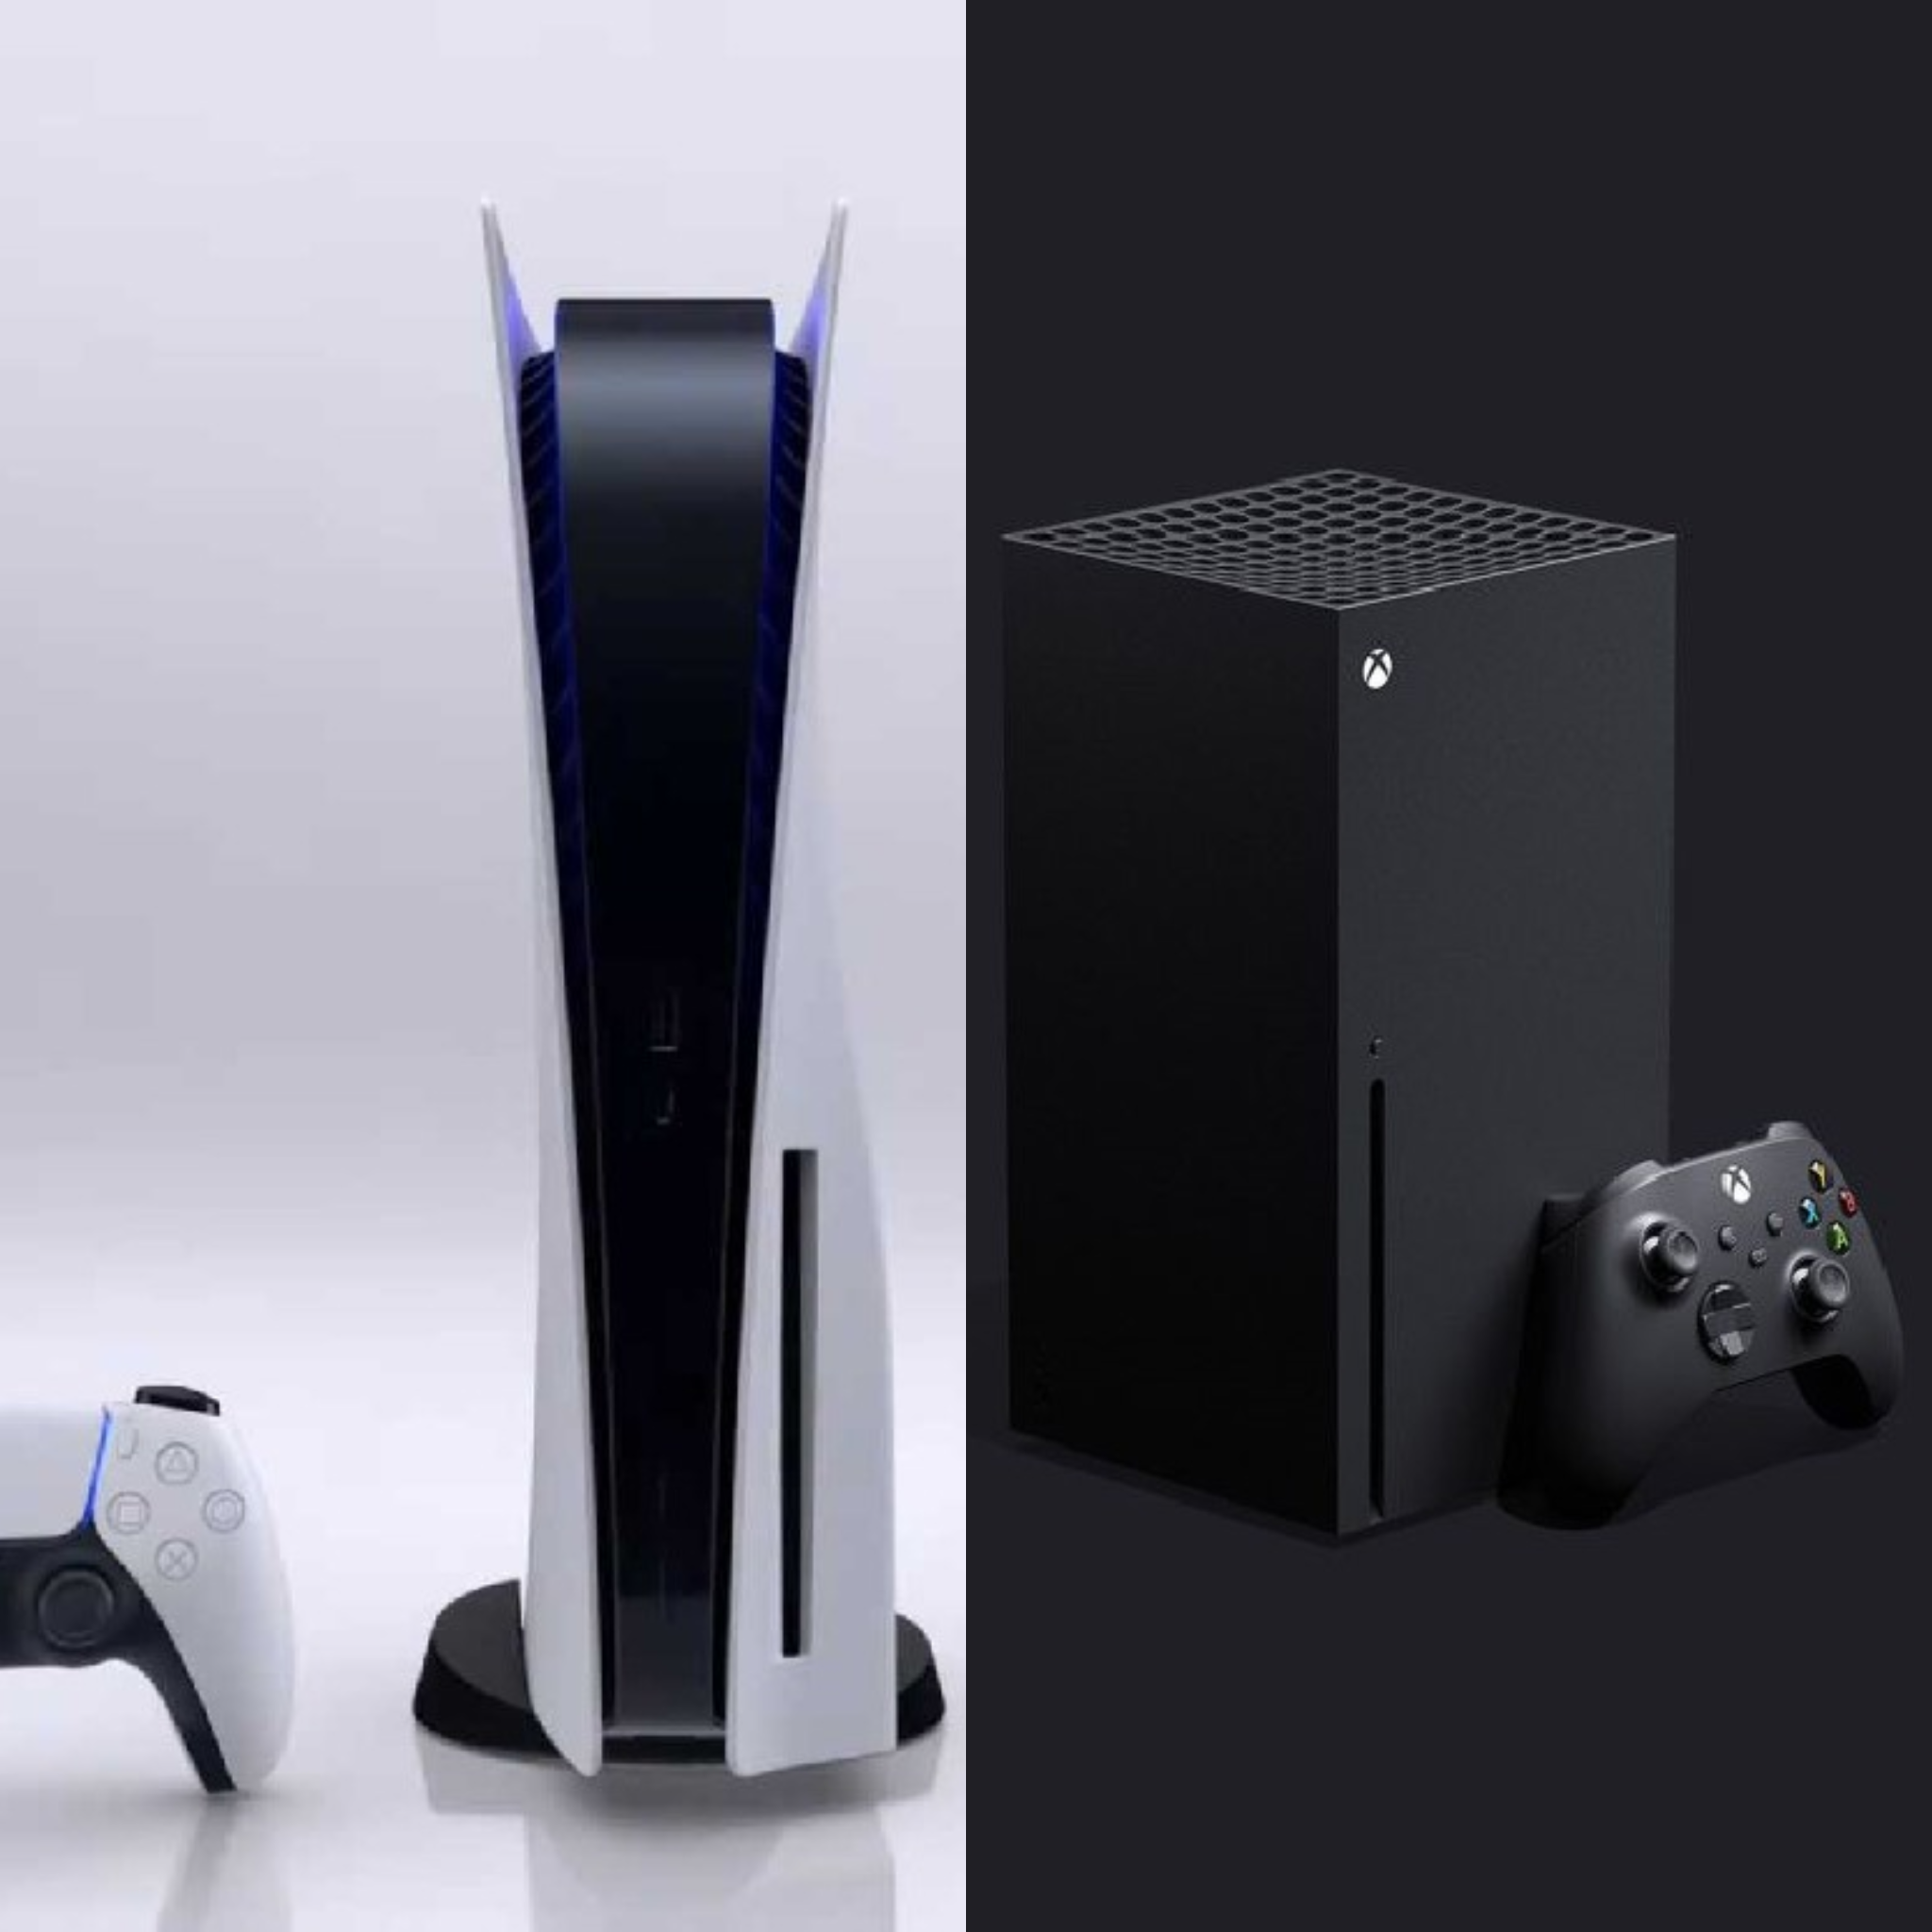 PS5 VS Xbox Series X